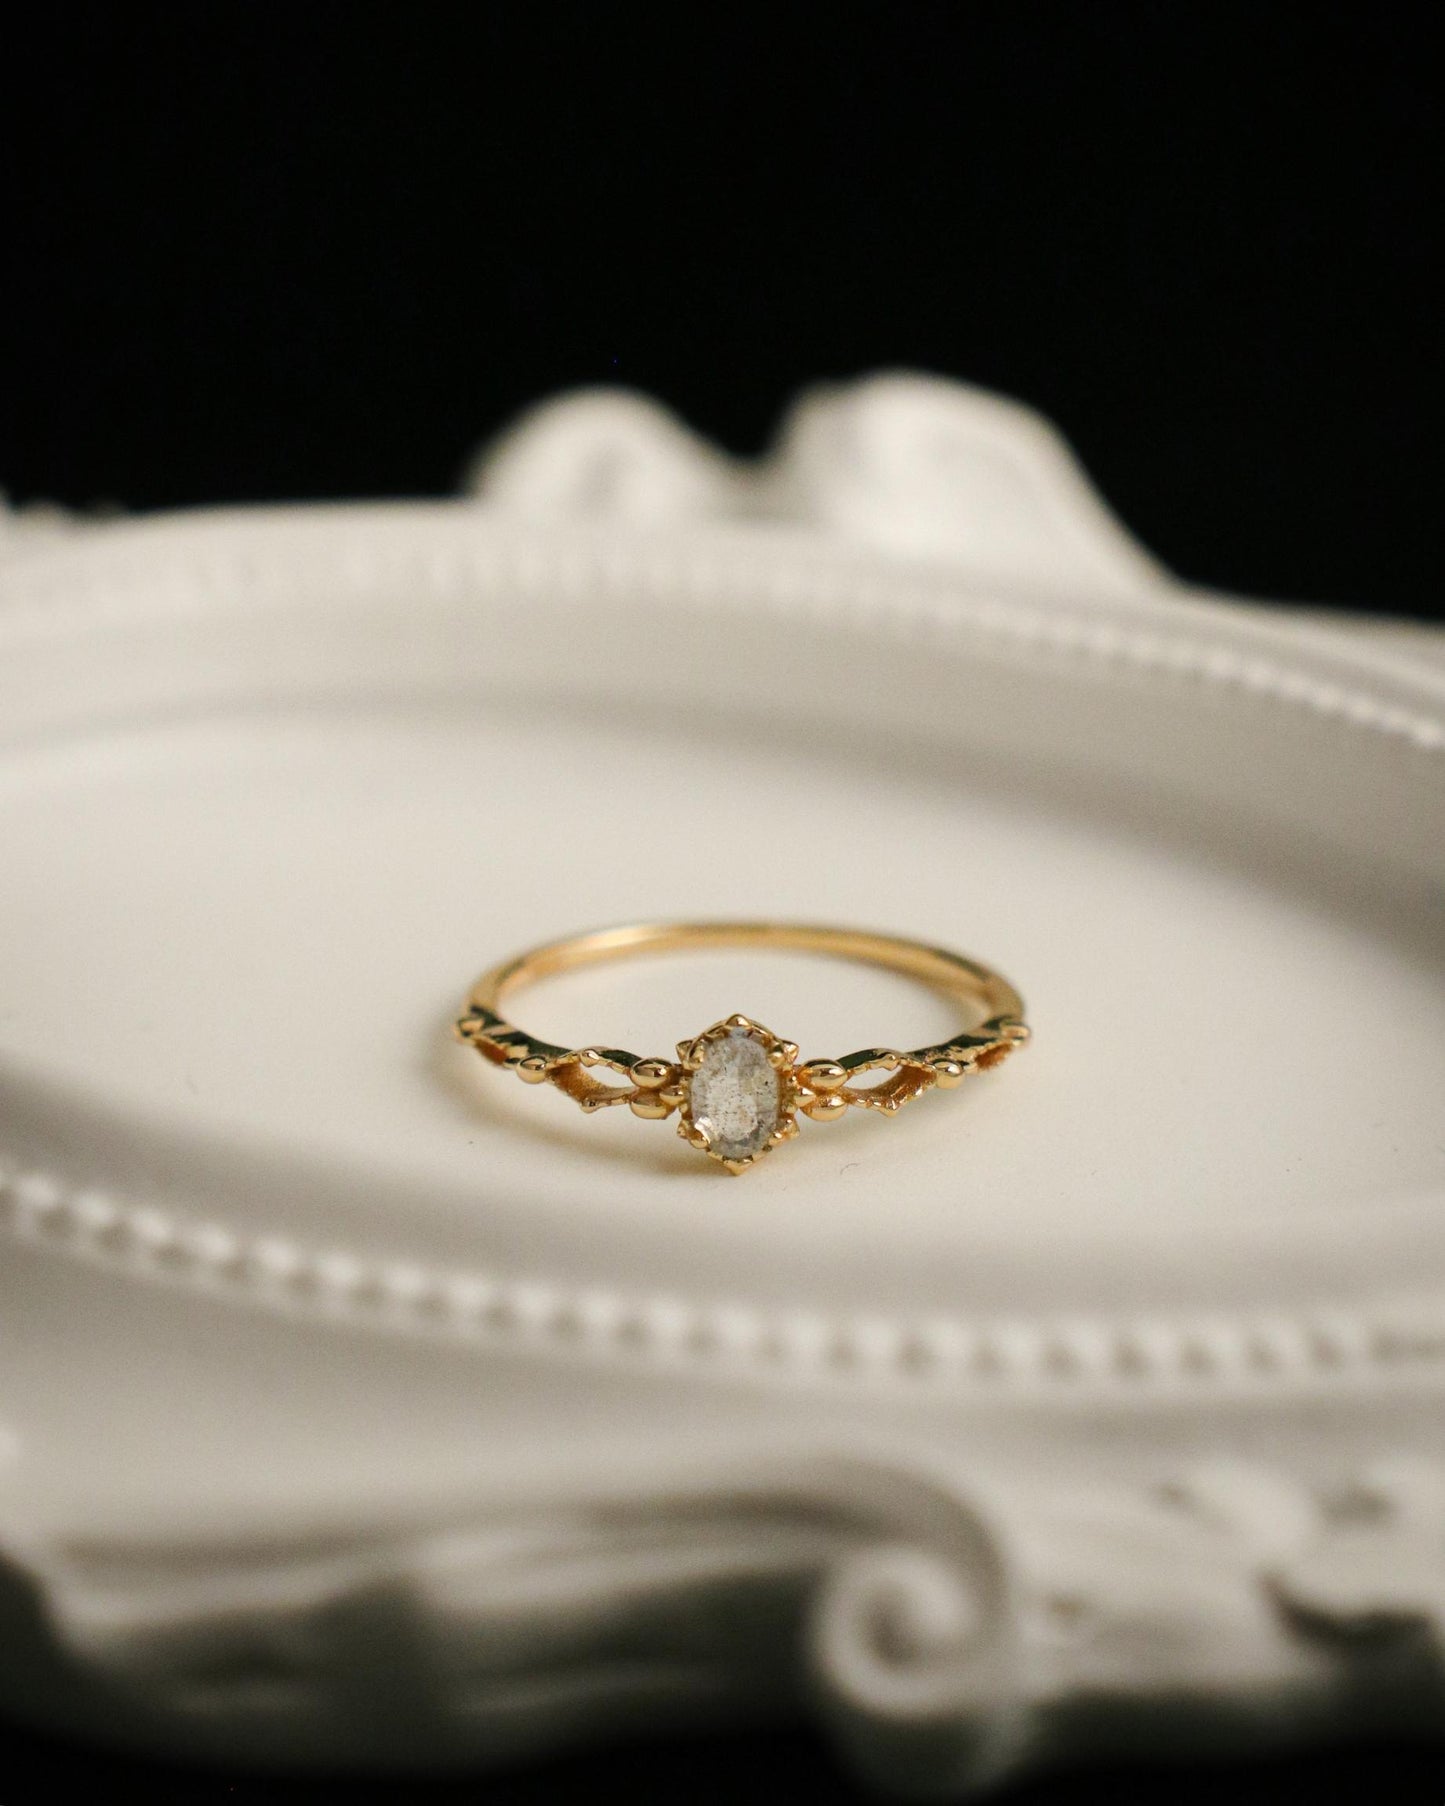 Oval Gemstone Ring